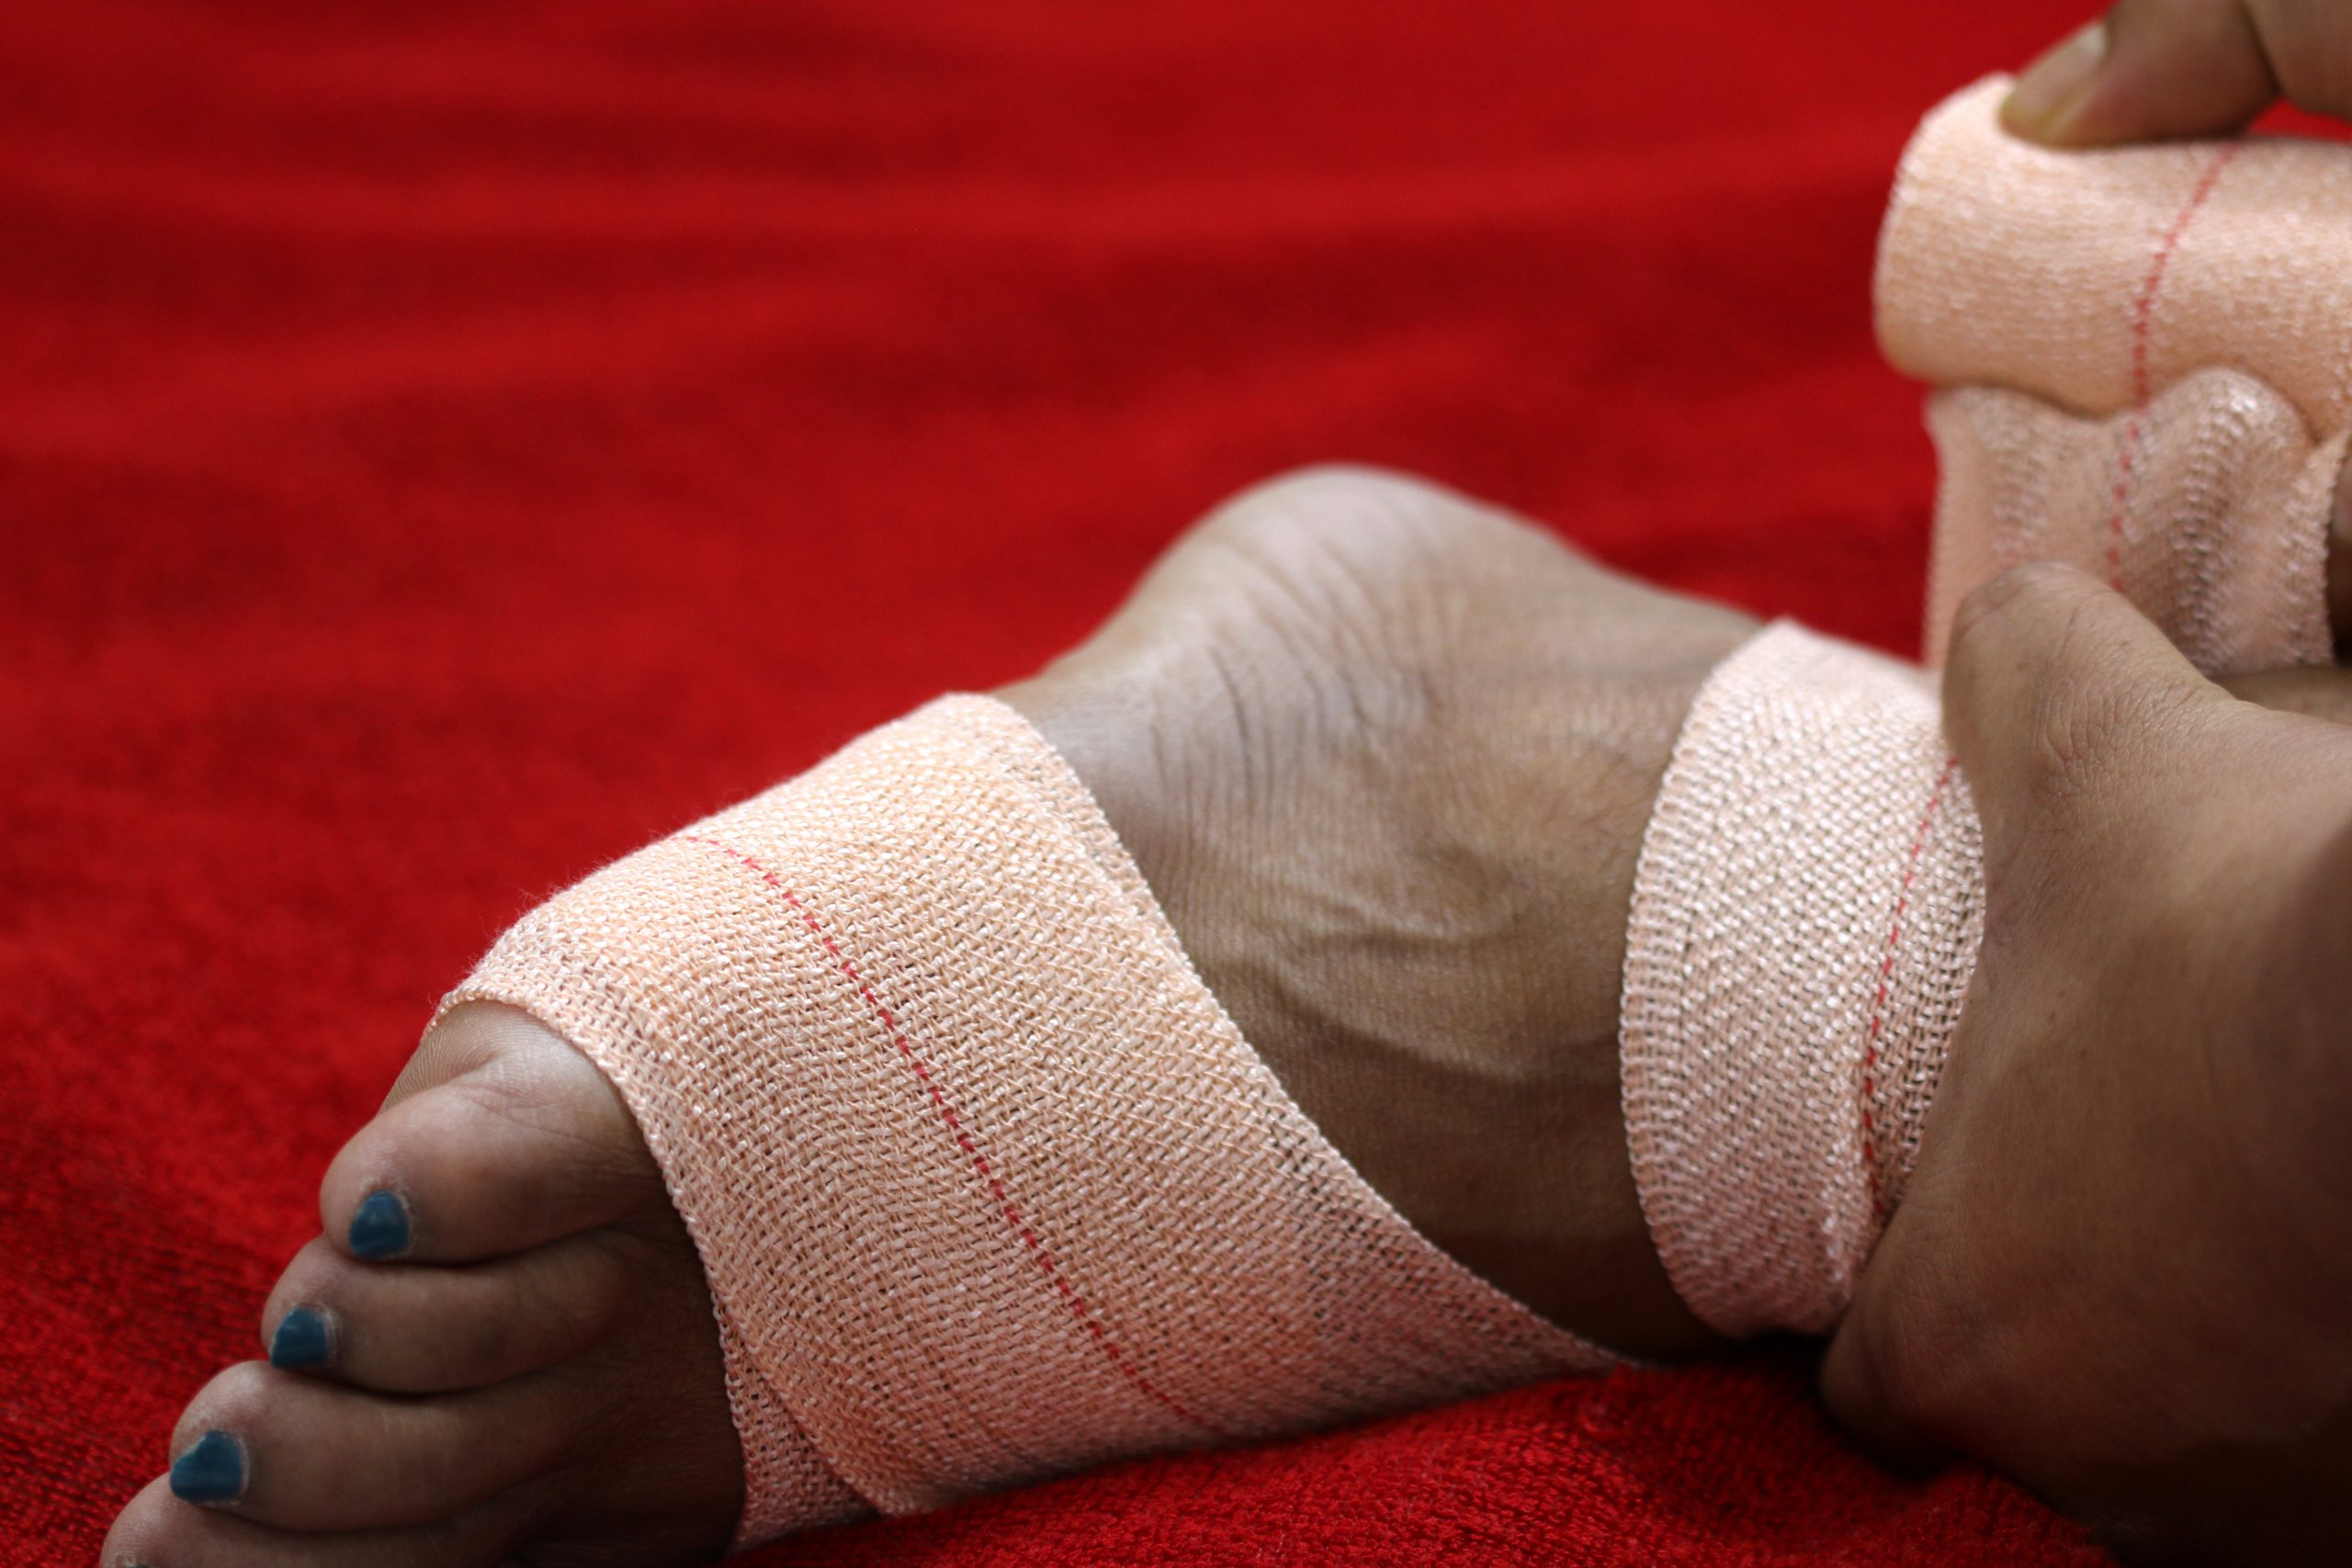 Crepe bandage for ankle strain